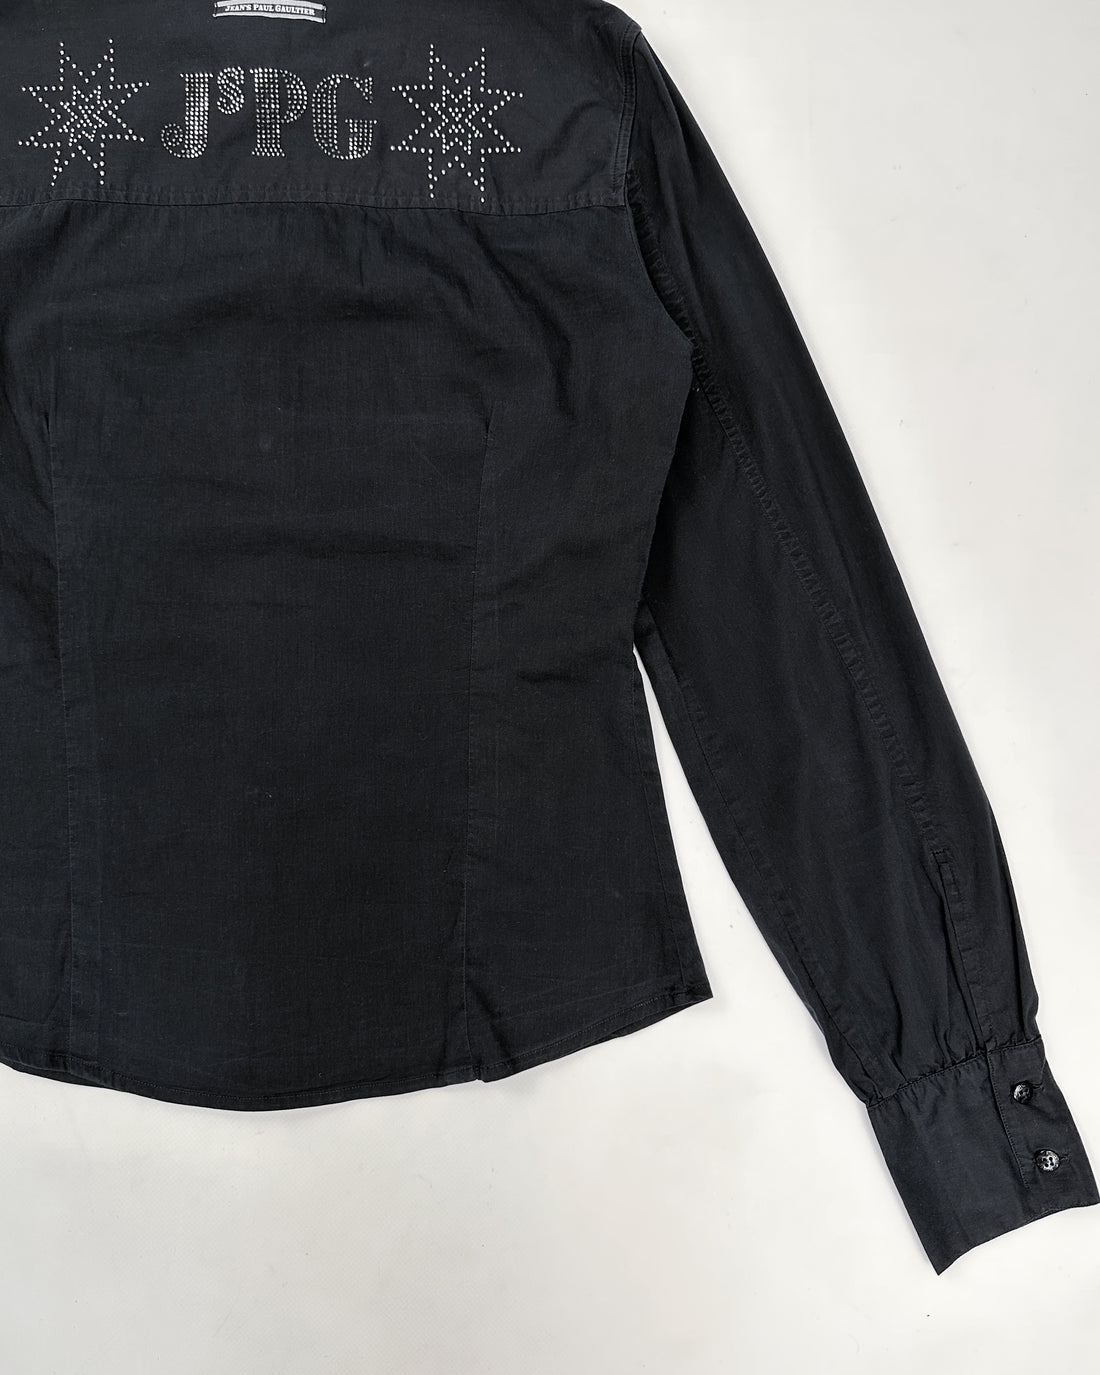 Jean Paul Gaultier Decorated Black Shirt 1990’s